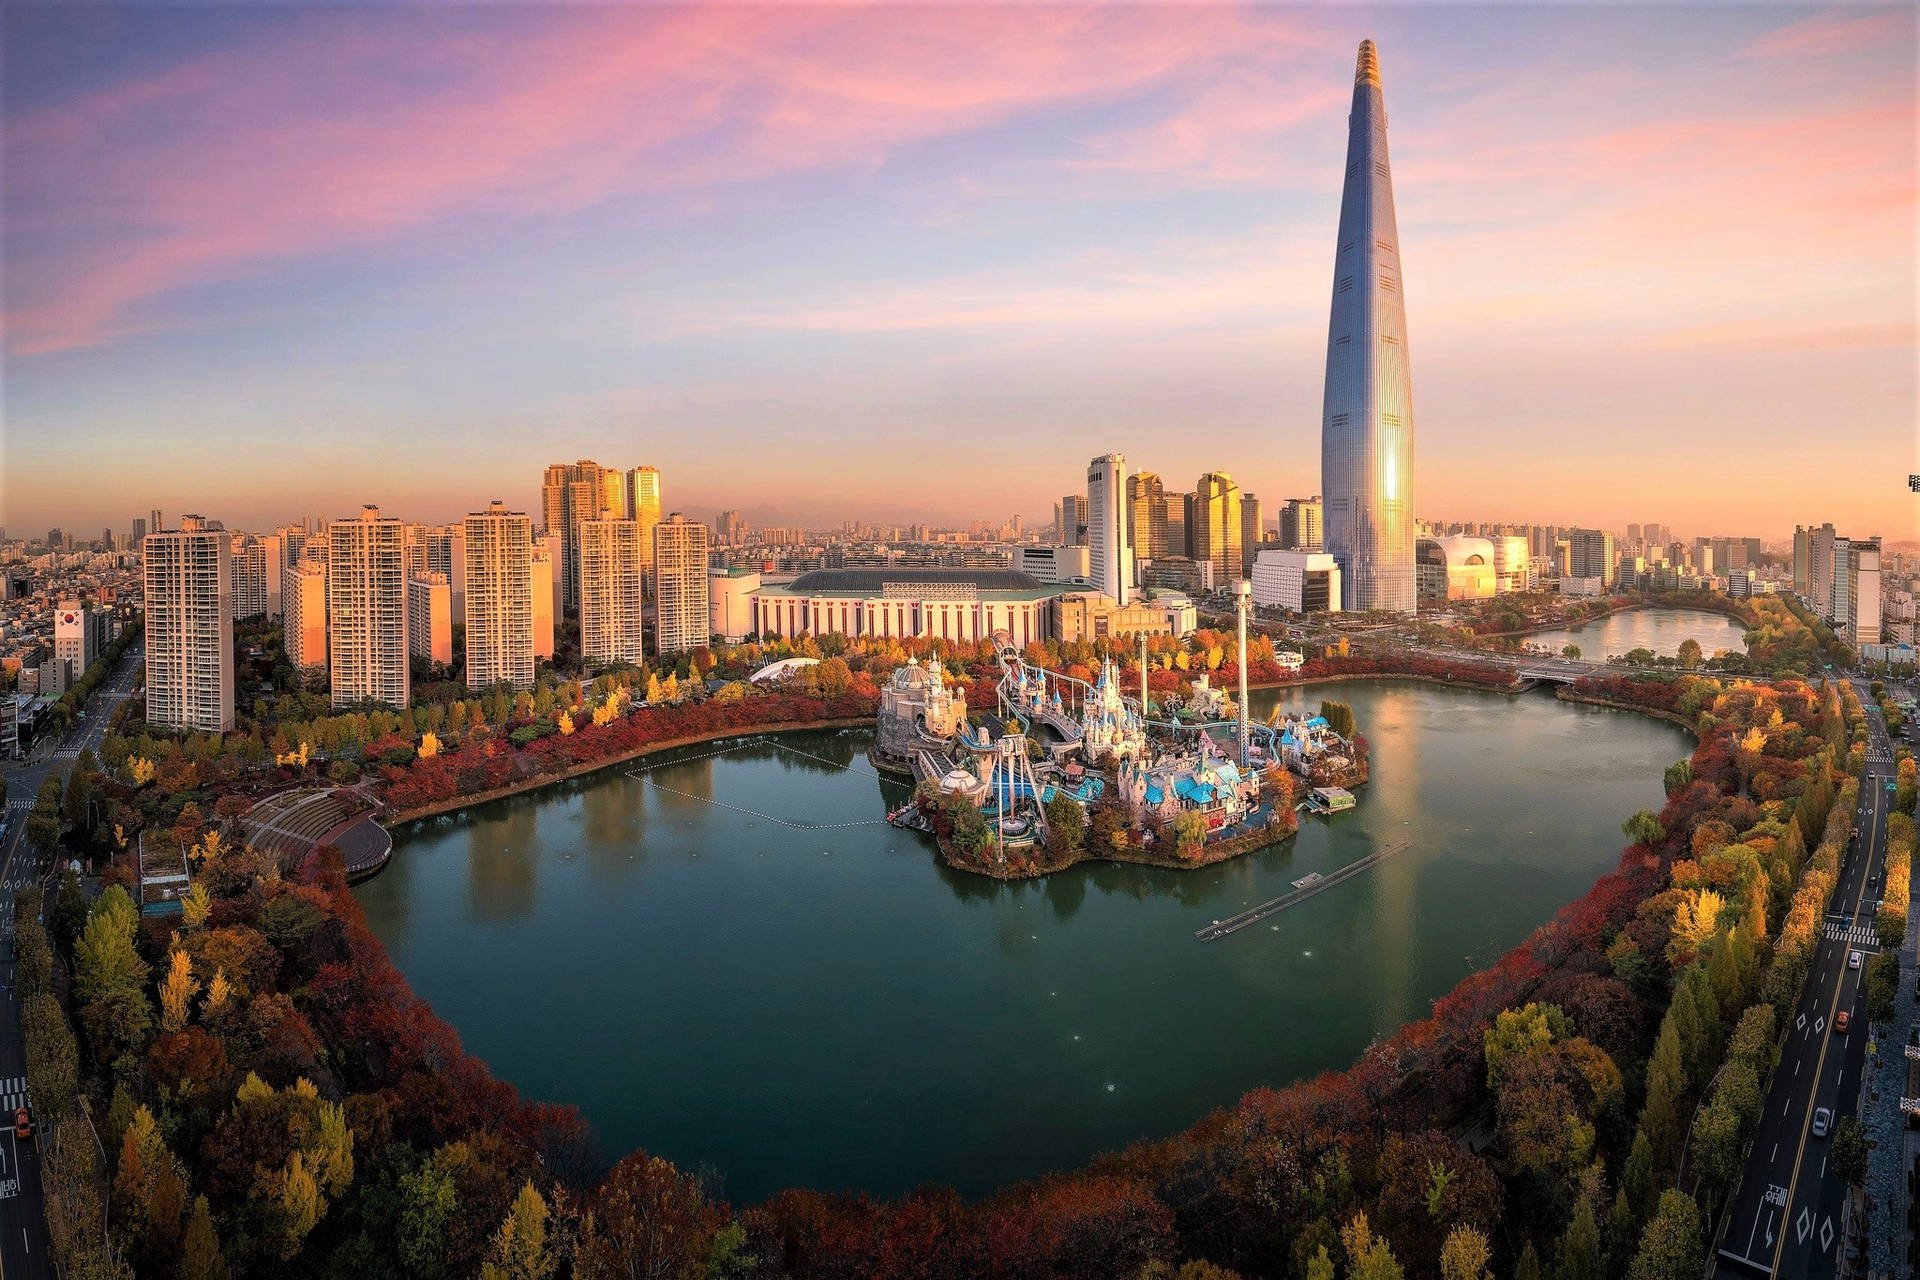 Lotteworld Tower Corea Del Sur Fondo de pantalla